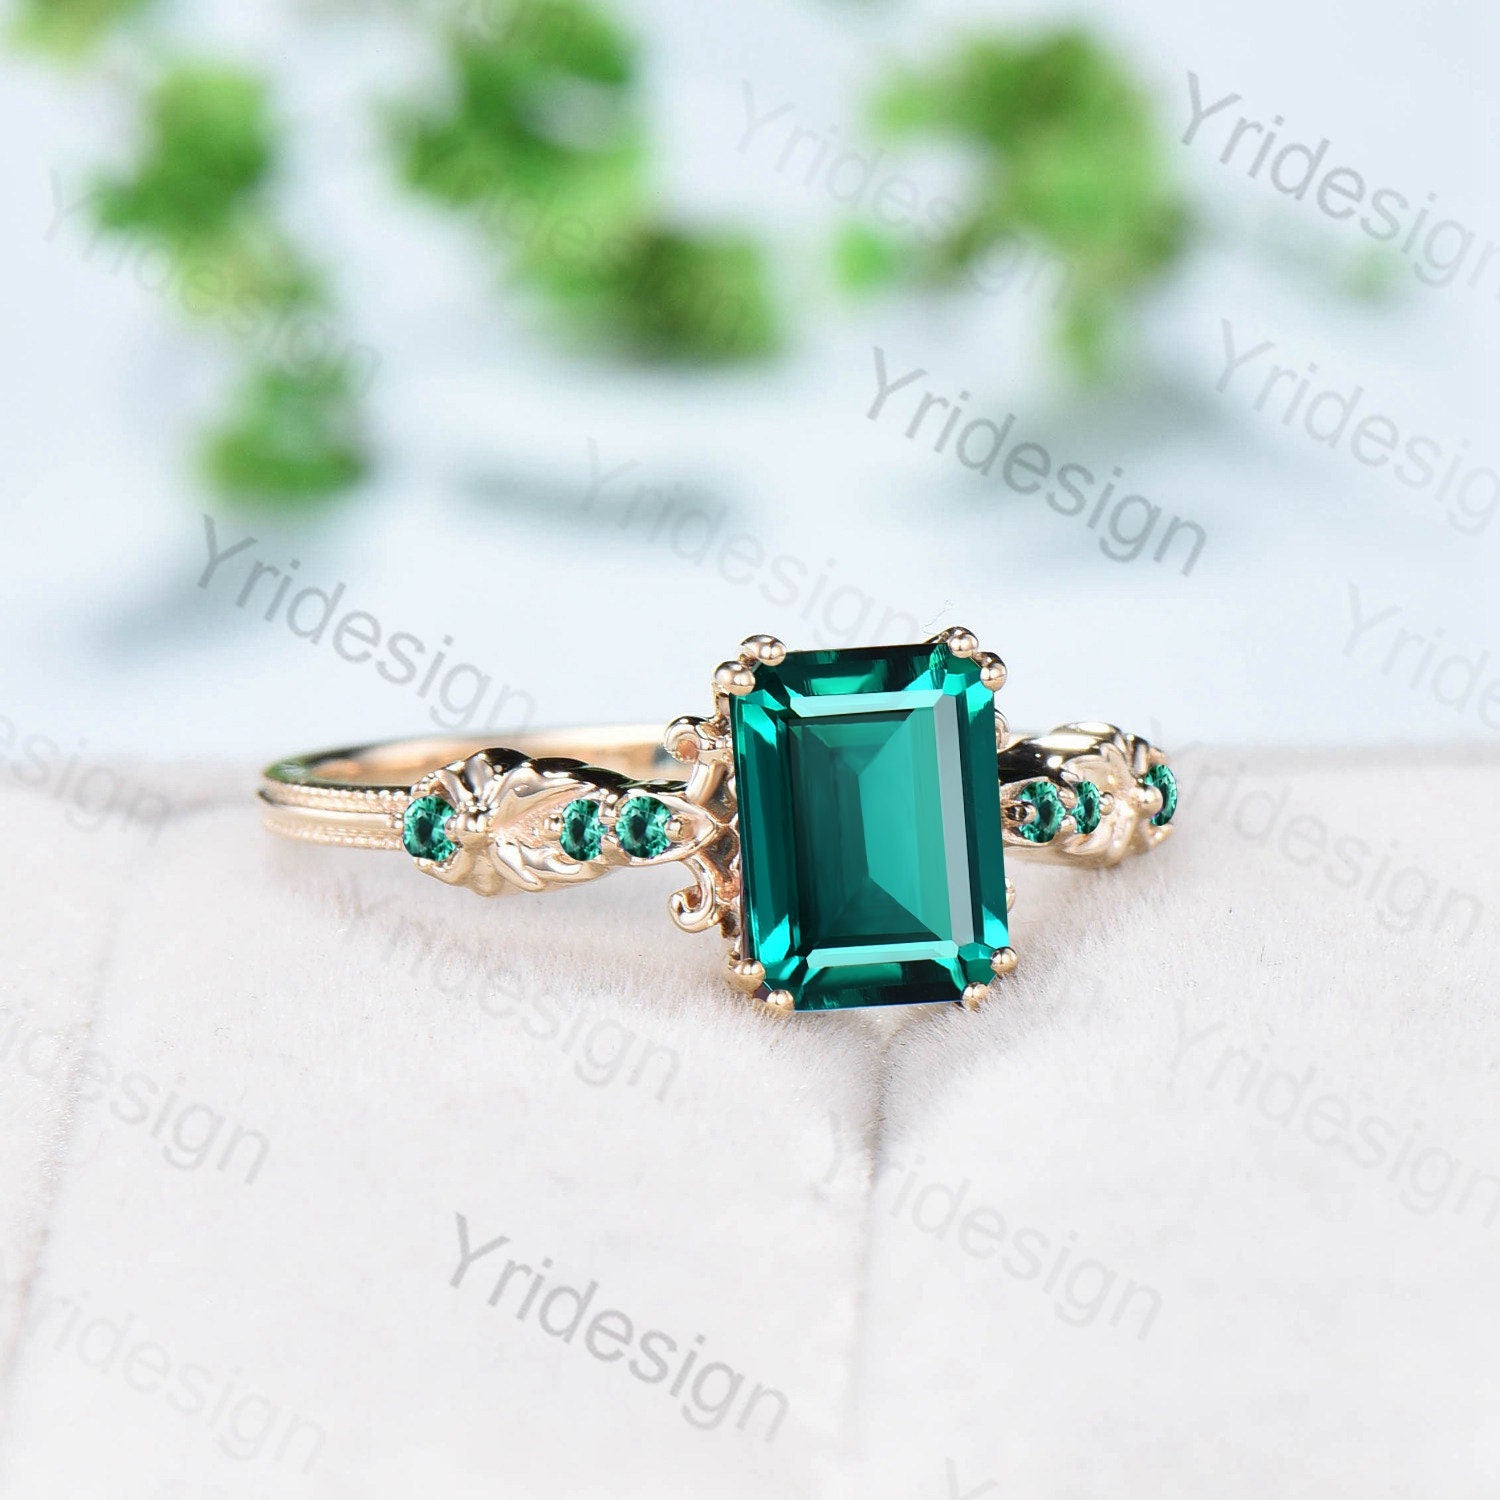 Ladies Celtic Trinity Knot Silver Ring - Emerald Green Gemstone